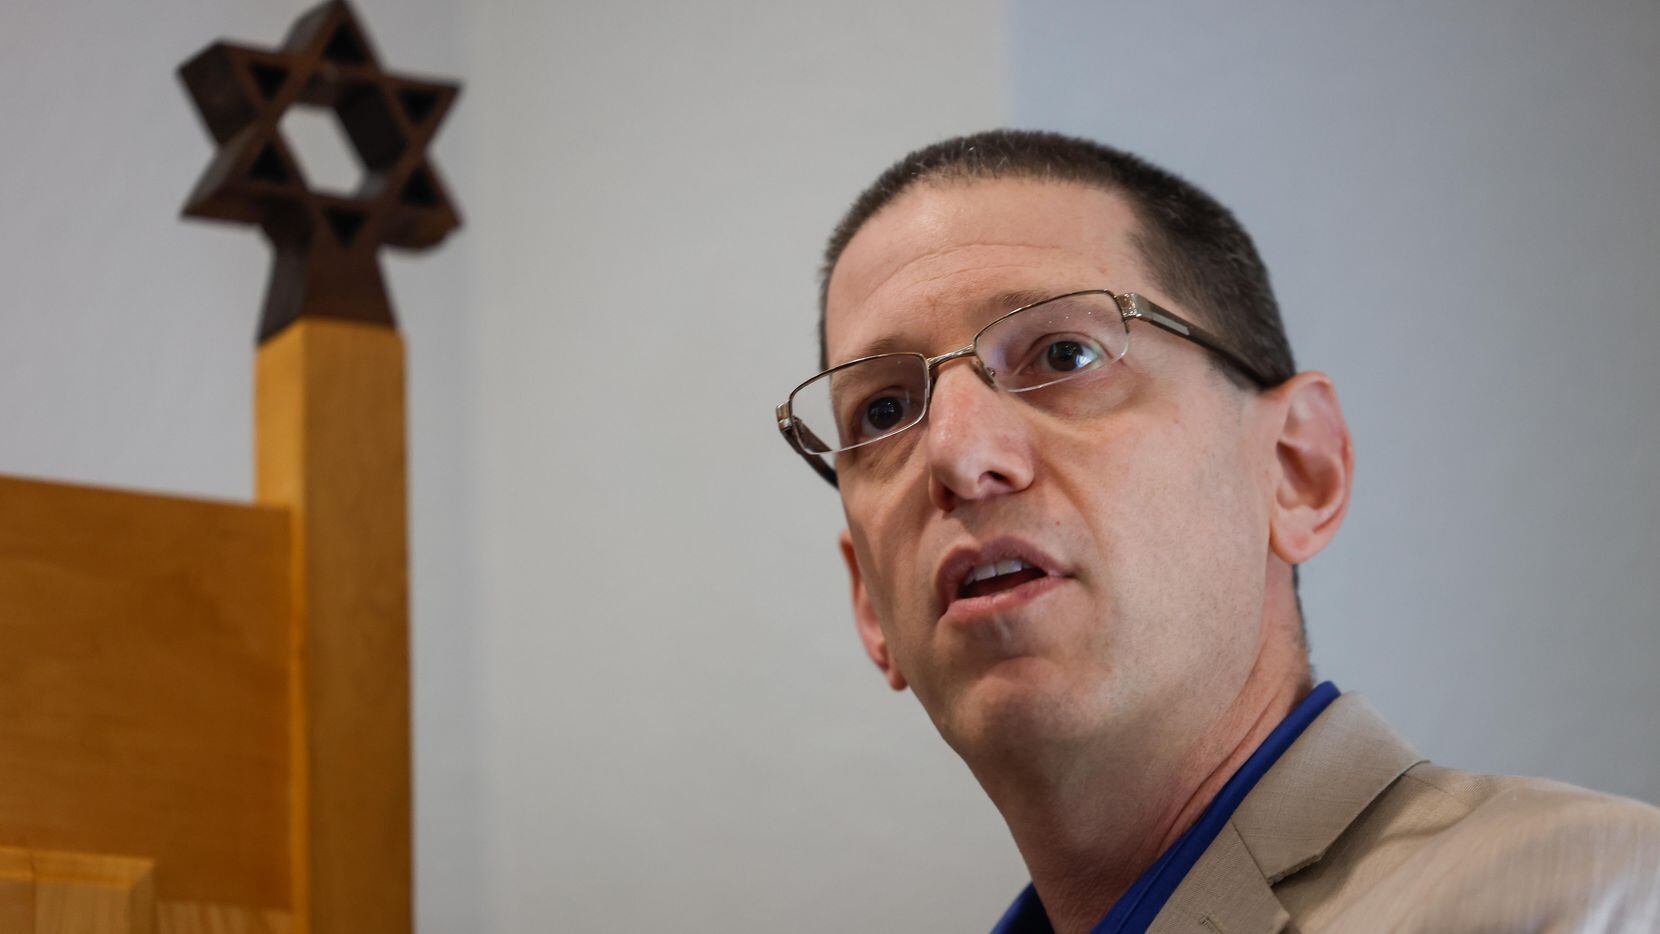 Rabbi Charlie Cytron-Walker speaks during a press conference at the Congregation Beth Israel...